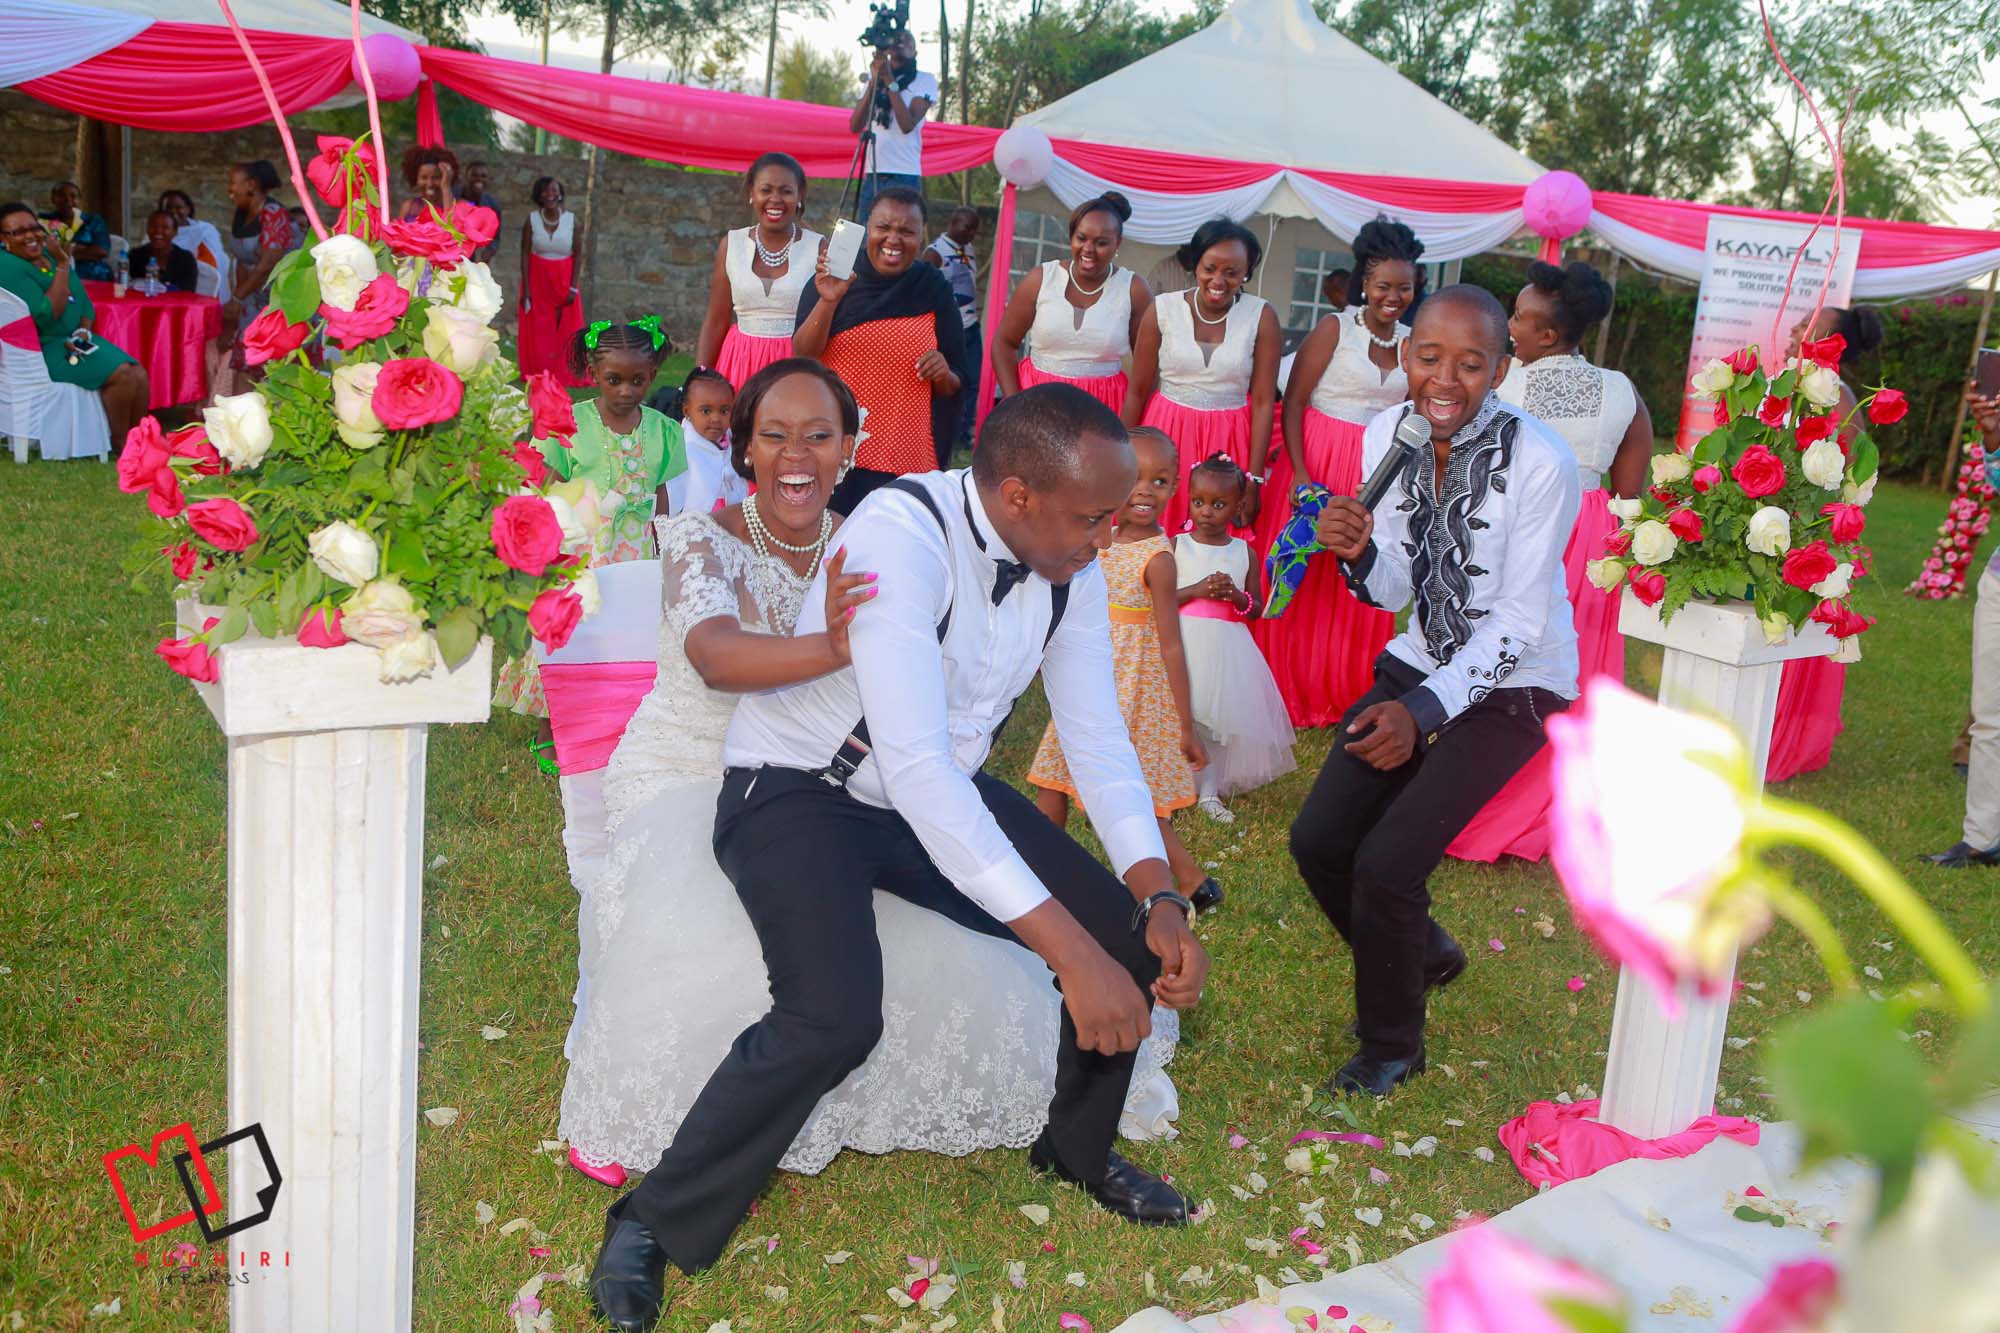 Best wedding photographer in kenya